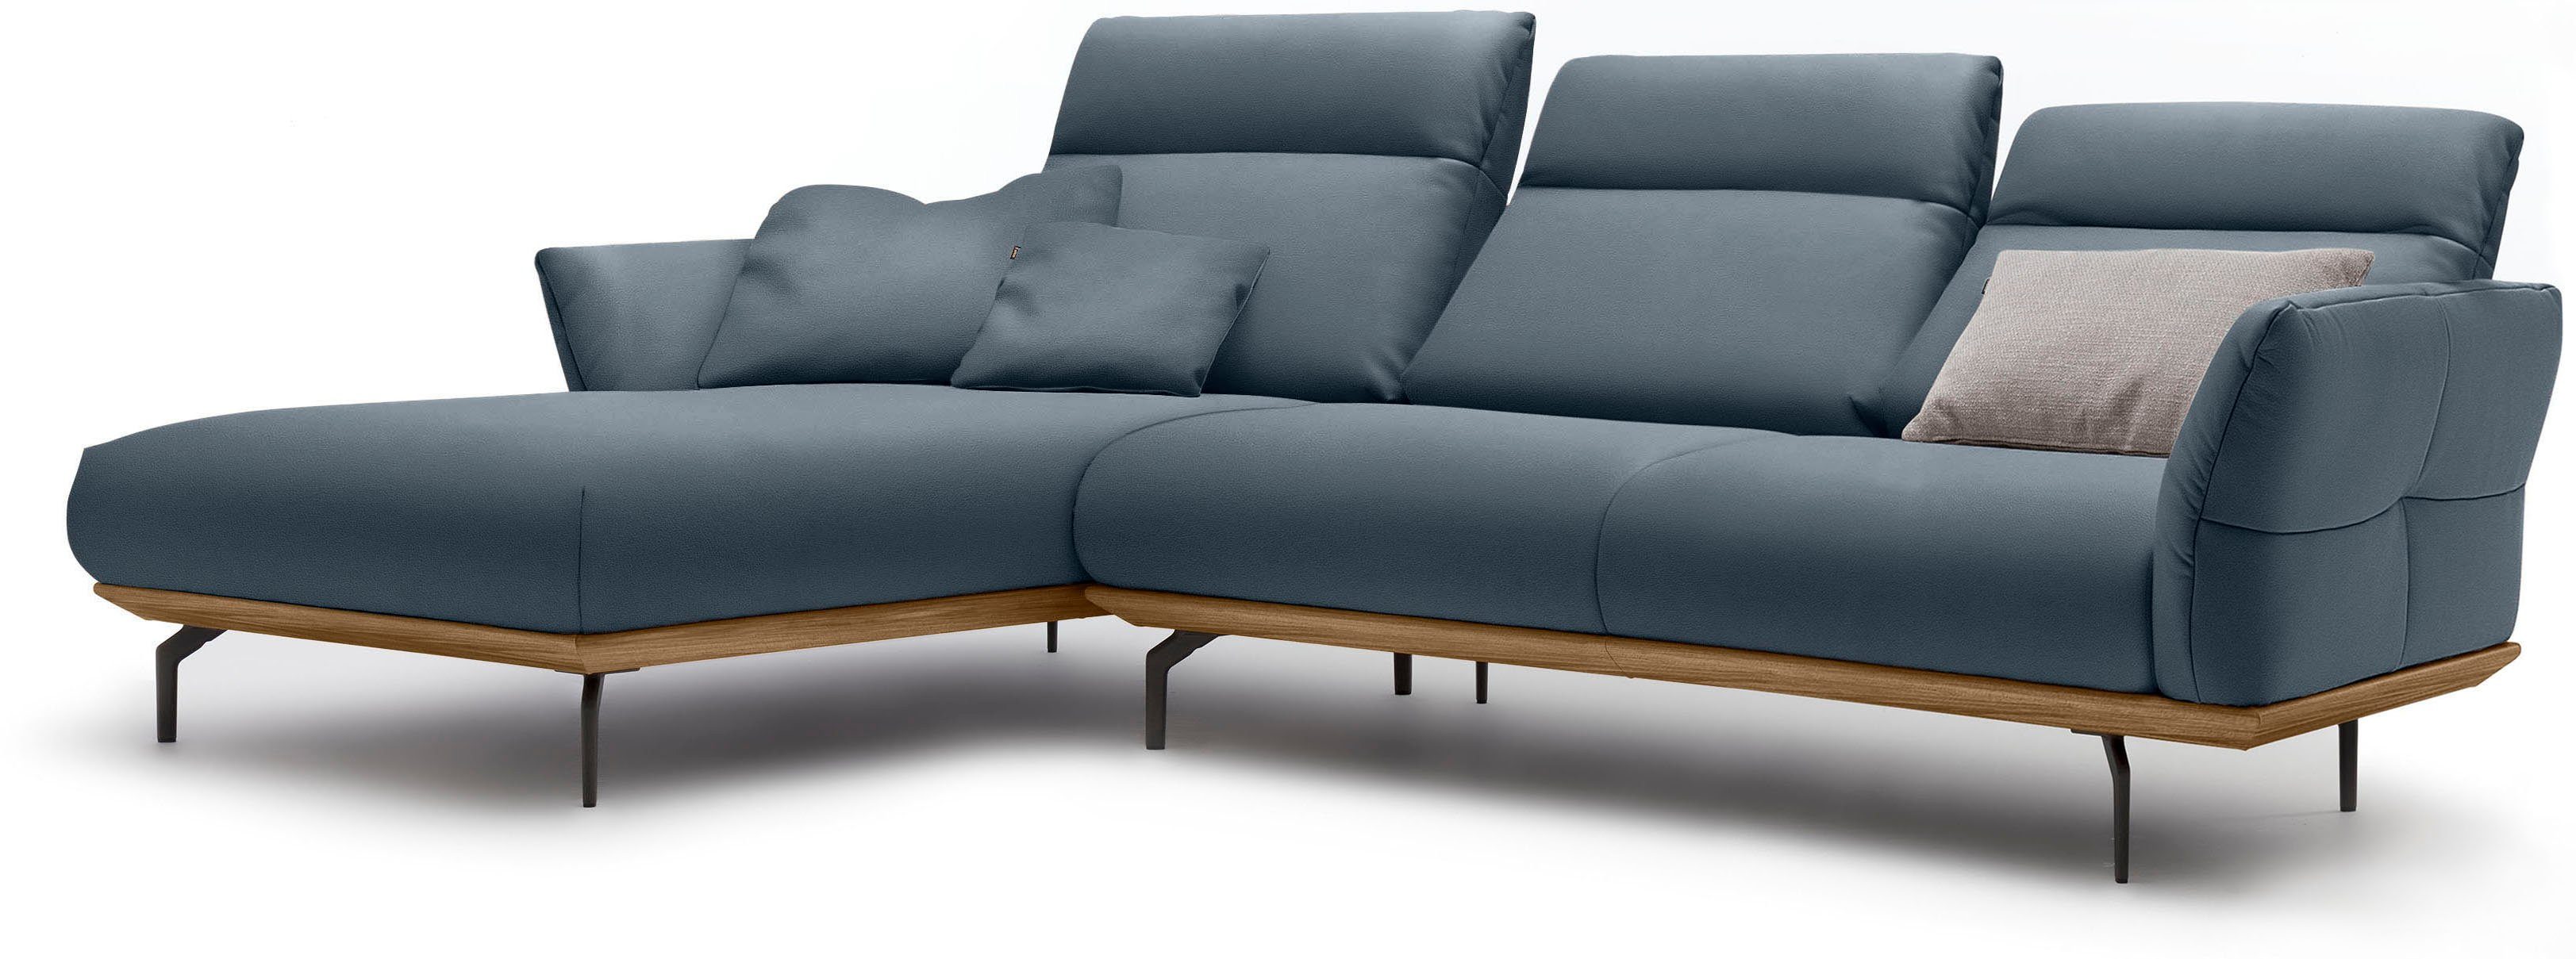 Winkelfüße Ecksofa in sofa in cm hs.460, 298 Nussbaum, Sockel Umbragrau, hülsta Breite